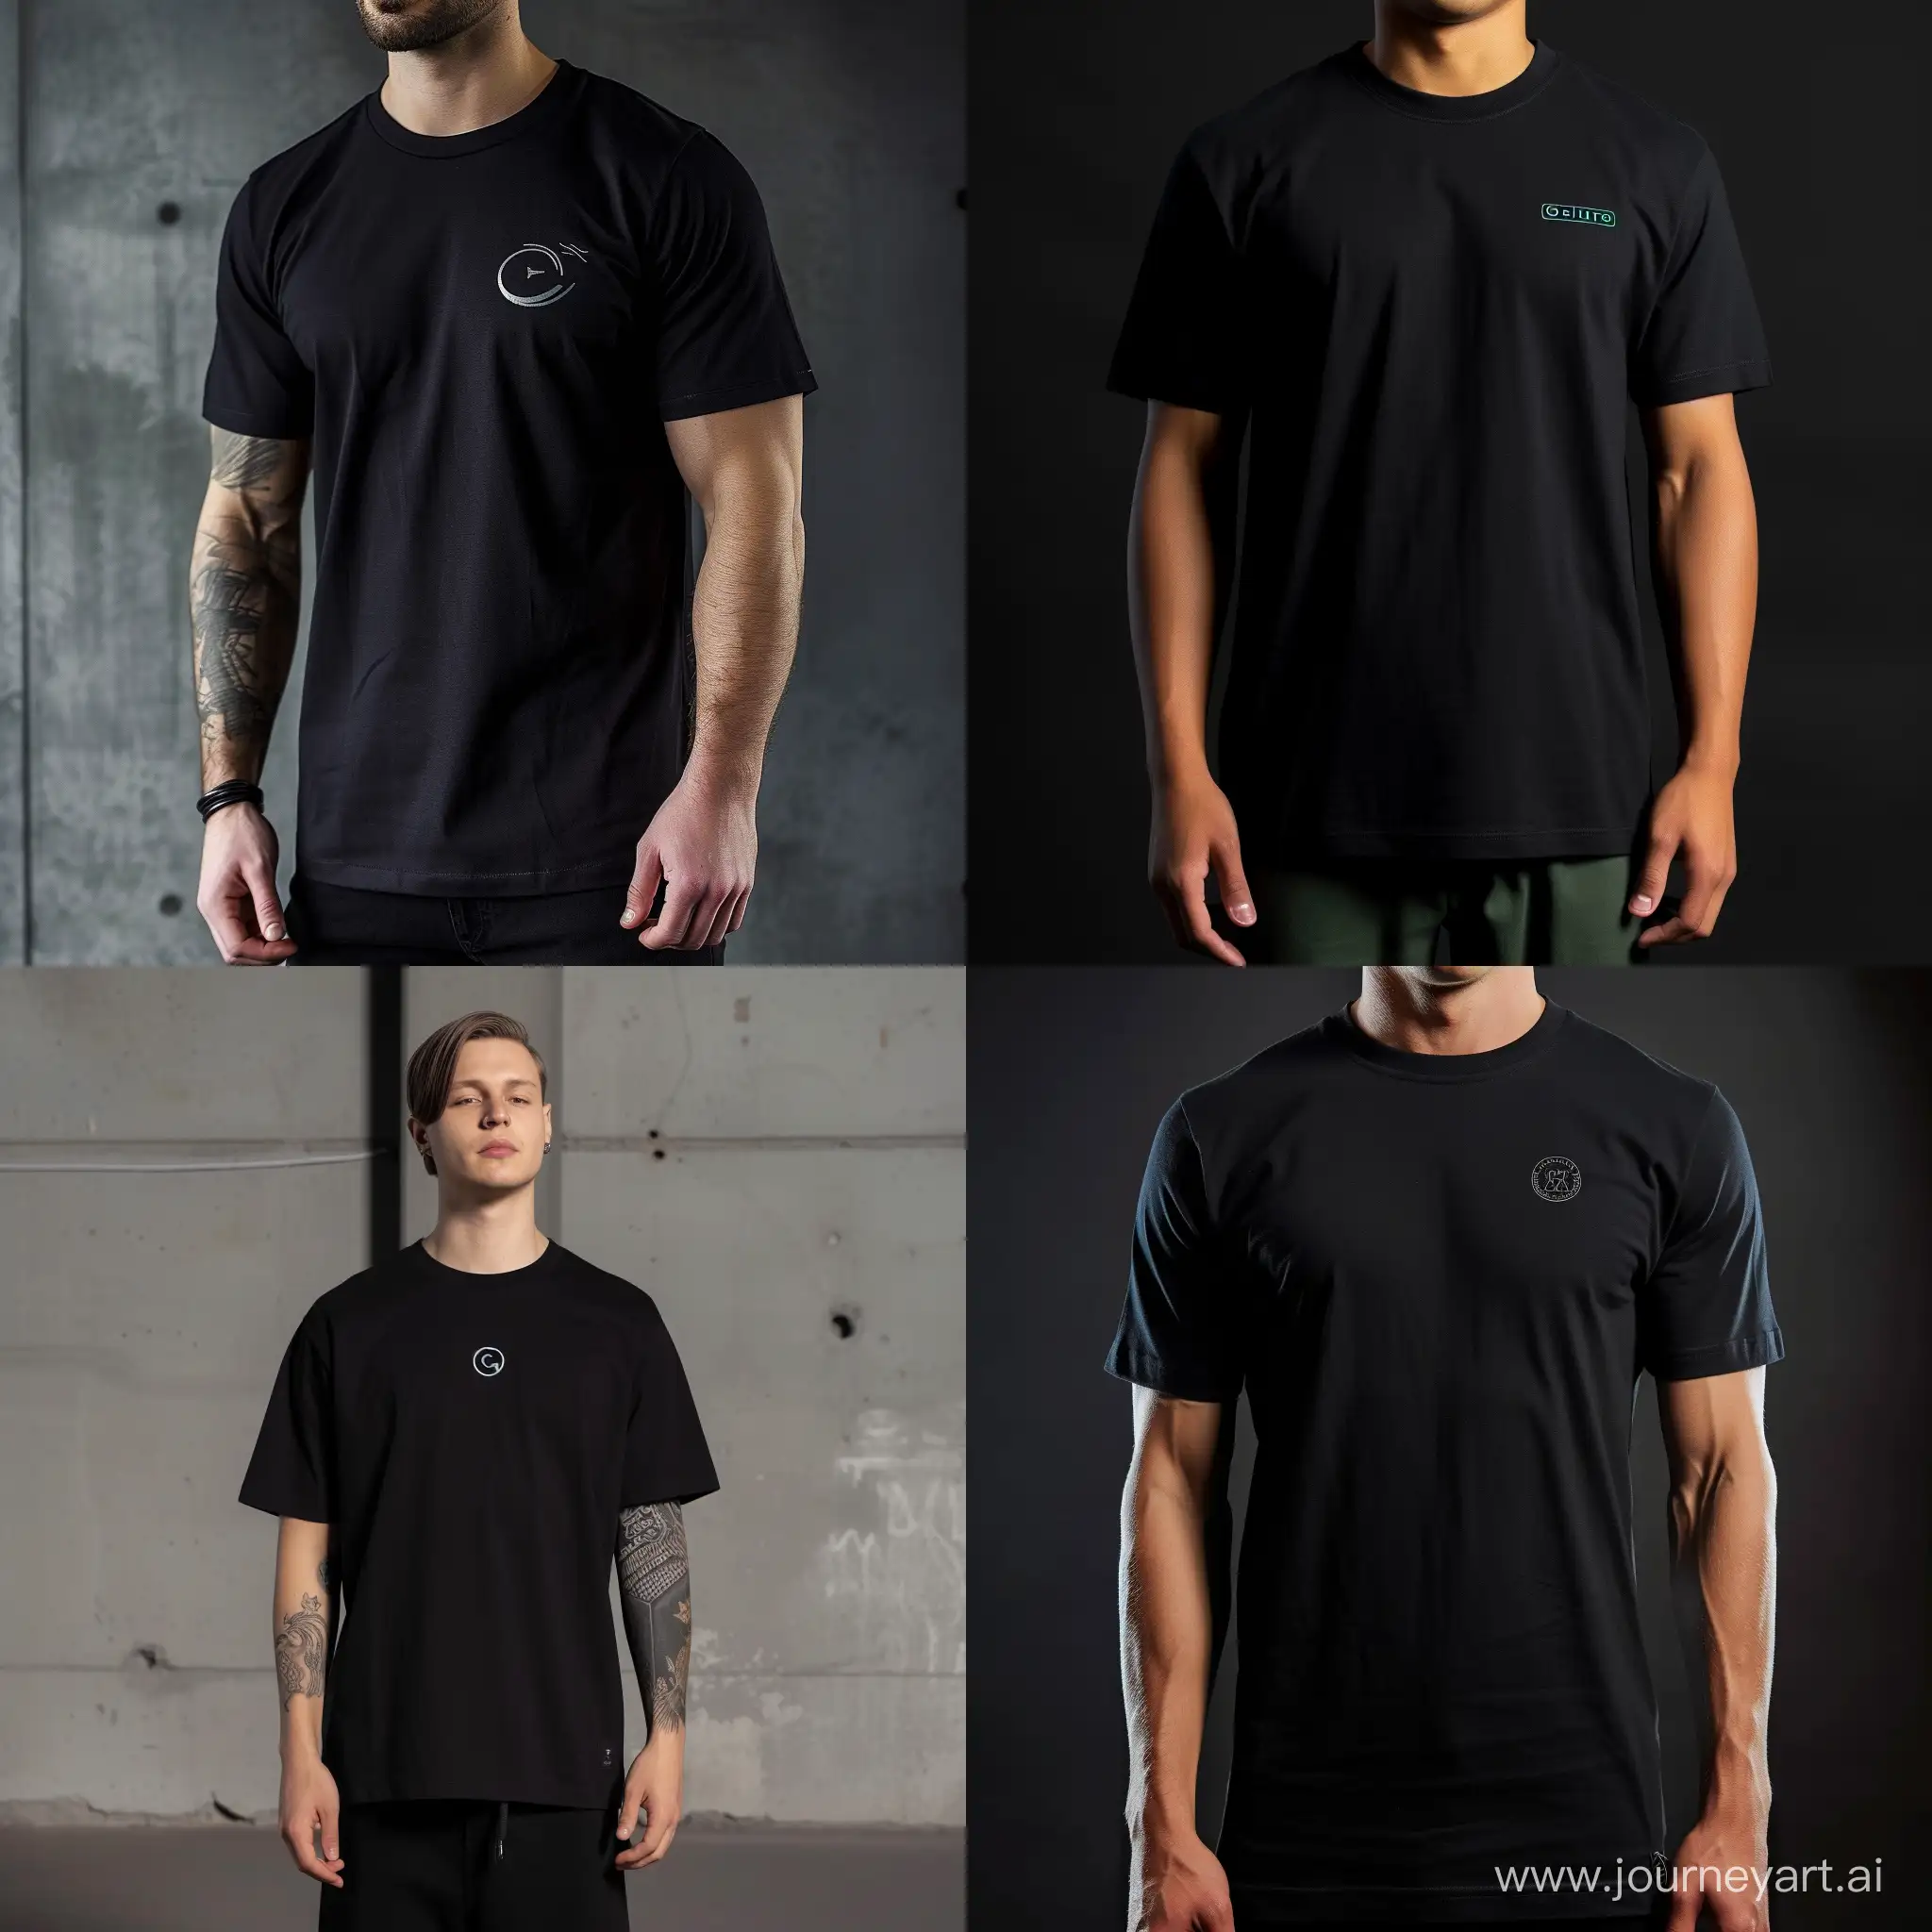 Stylish-Black-TShirt-with-Glow-Reflective-Logo-Product-Photography